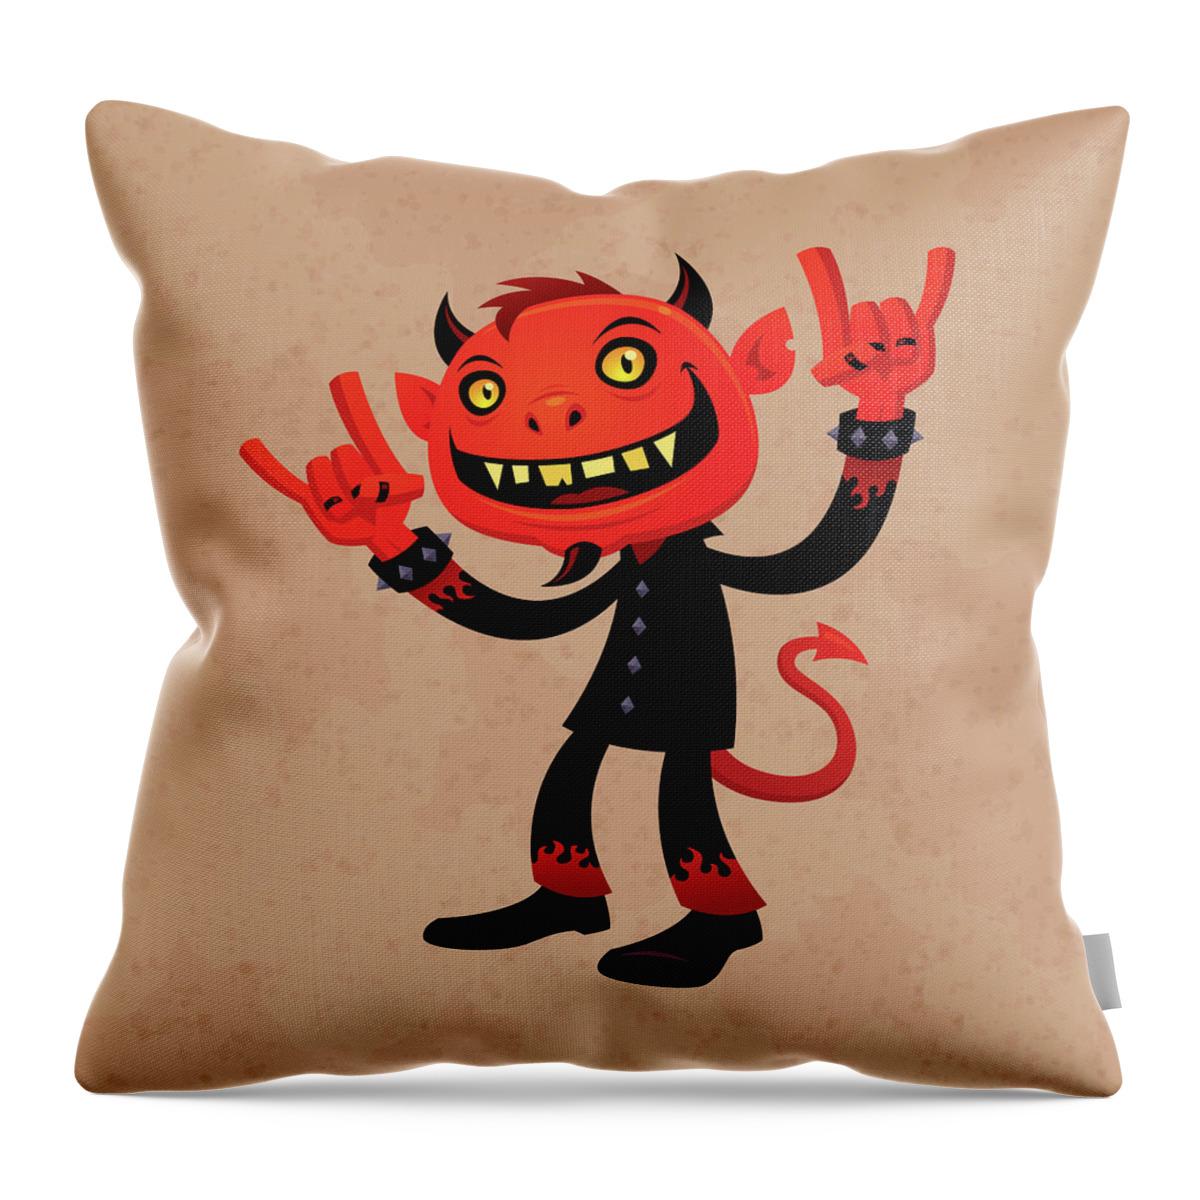 Heavy Metal Throw Pillow featuring the digital art Heavy Metal Devil by John Schwegel